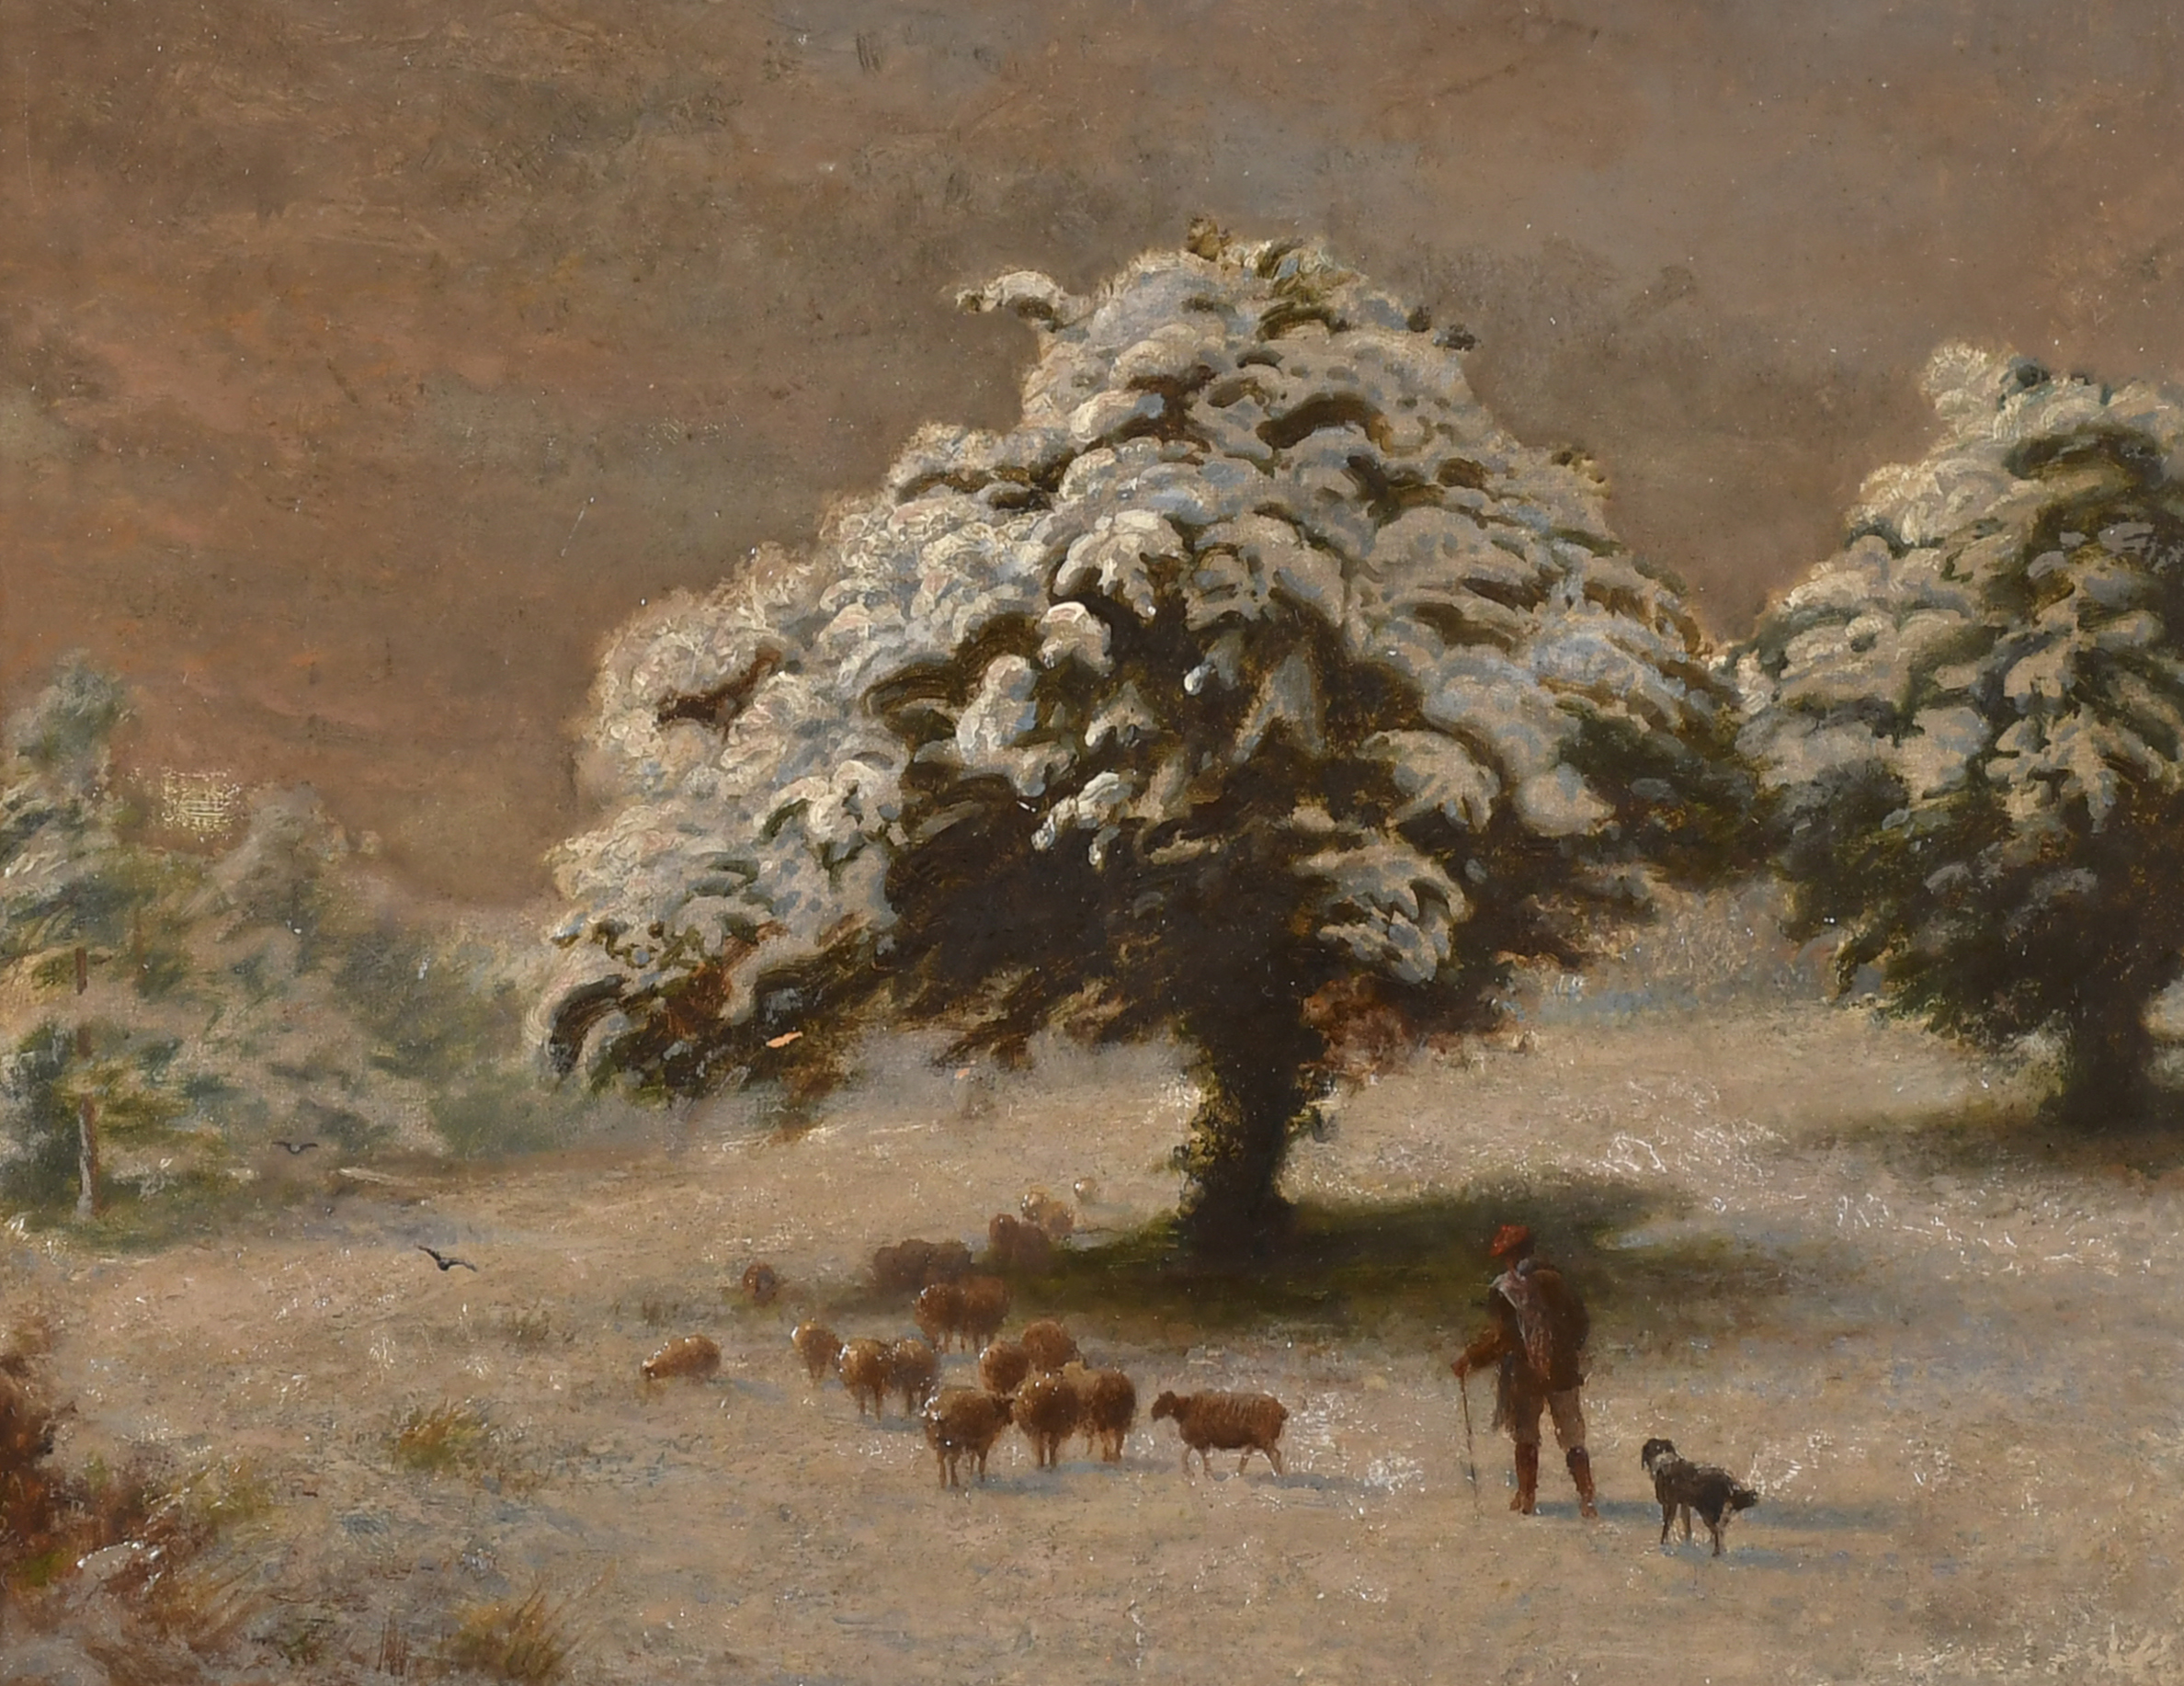 19th Century English School. Shepherd and Flock in a Winter Landscape, Oil on board, 8" x 10.5" (